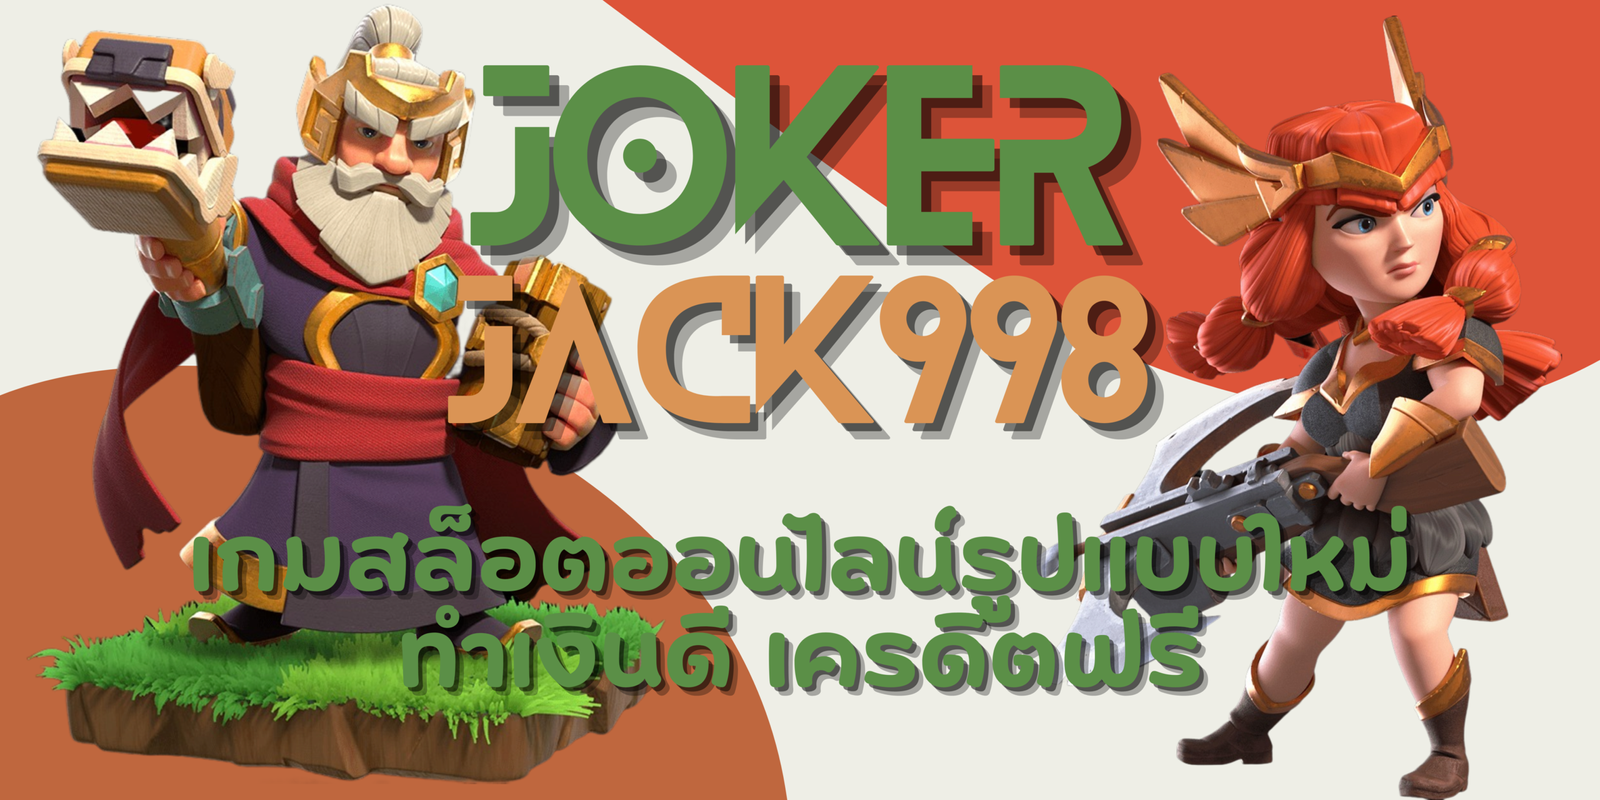 joker-jack998-เครดิตฟรี